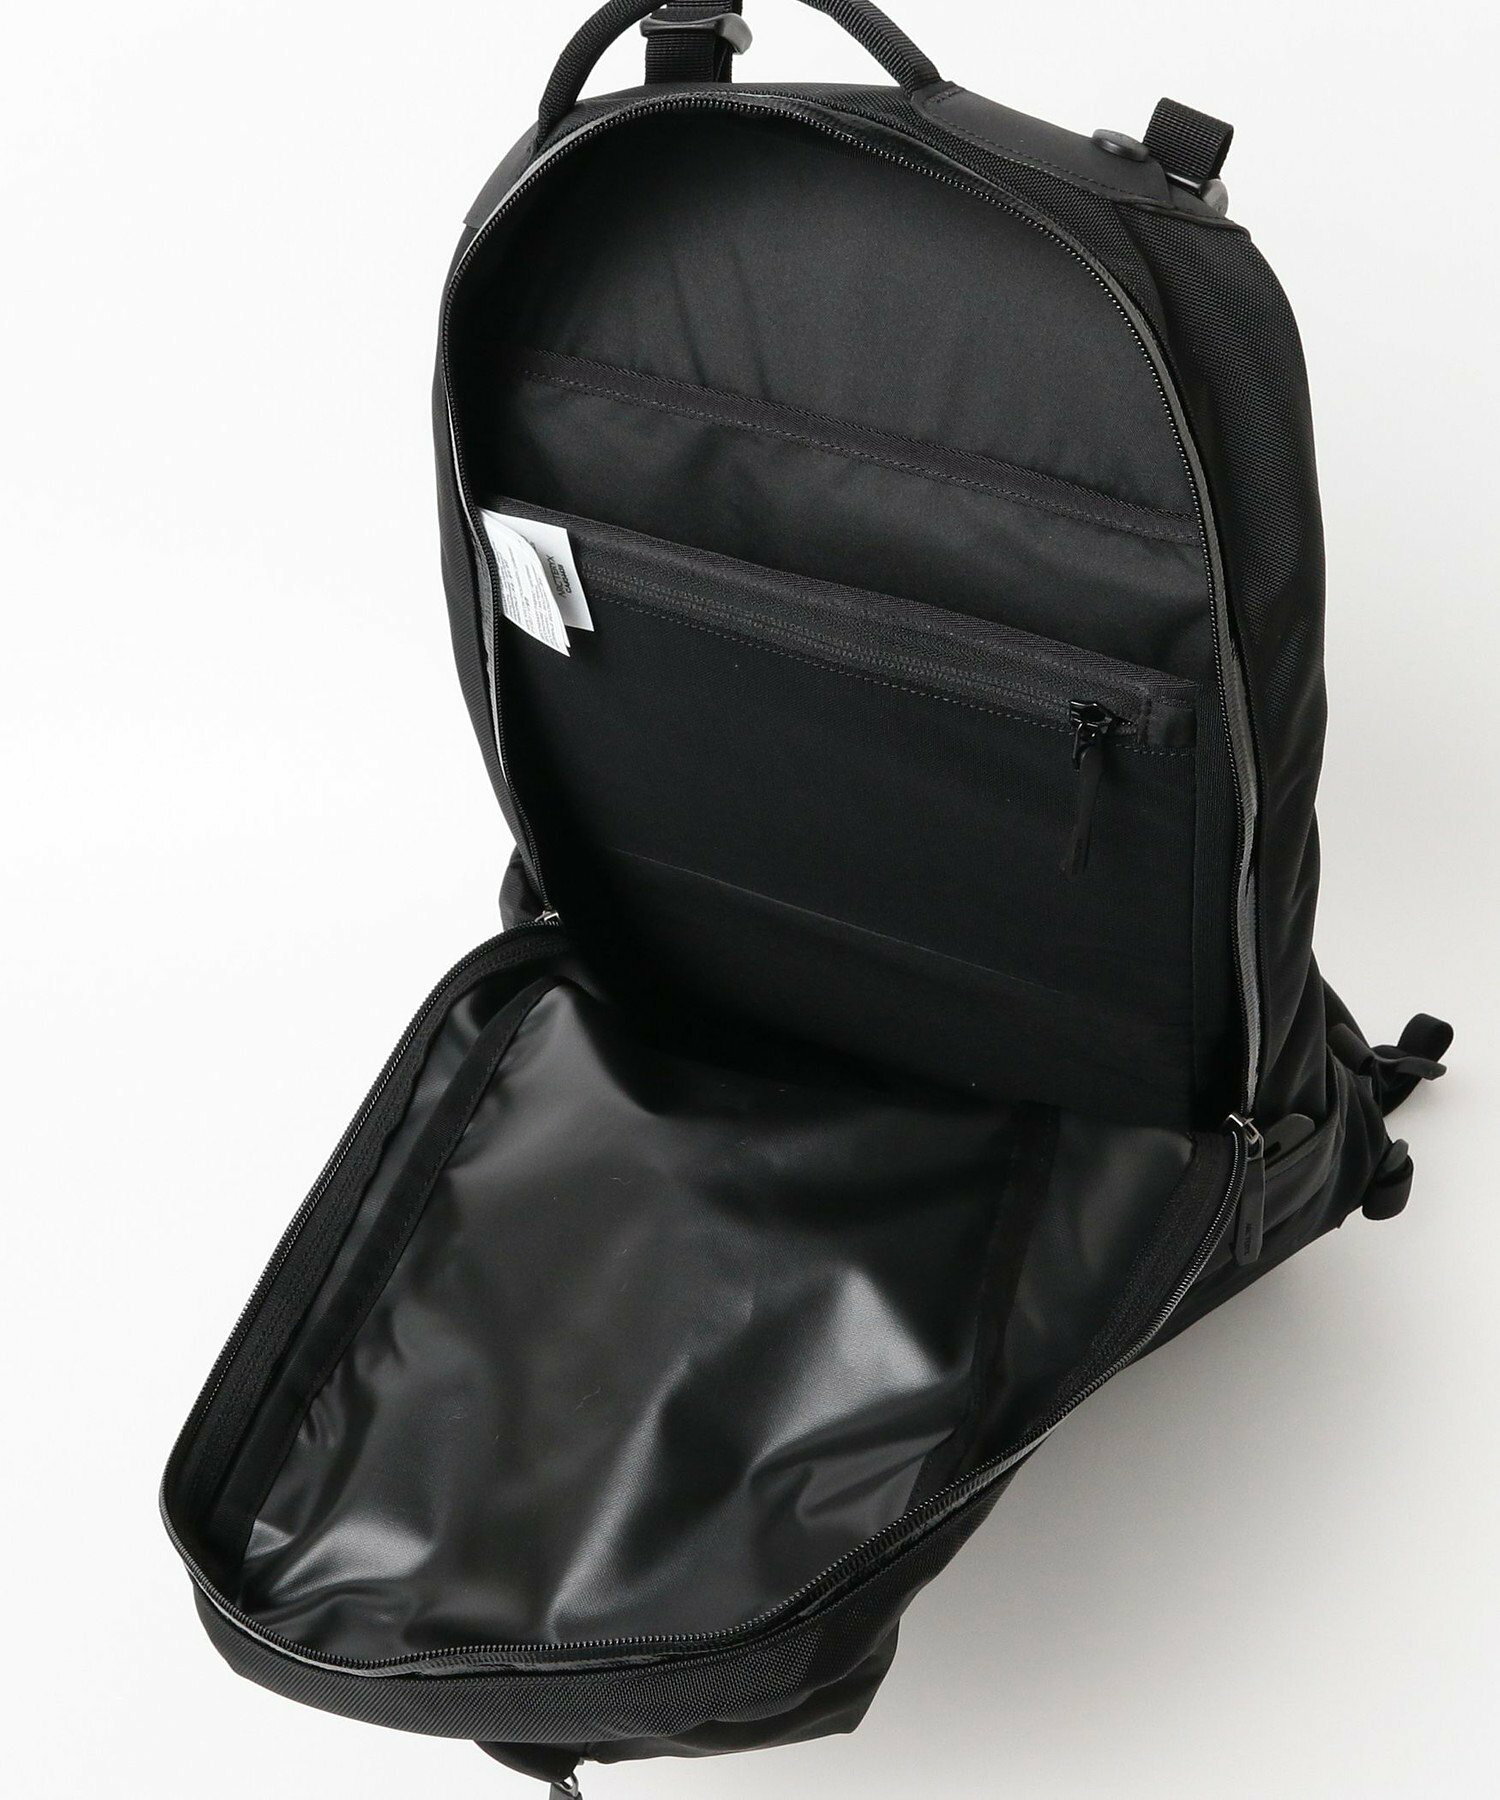 ARC'TERYX / Arro 22 Backpack